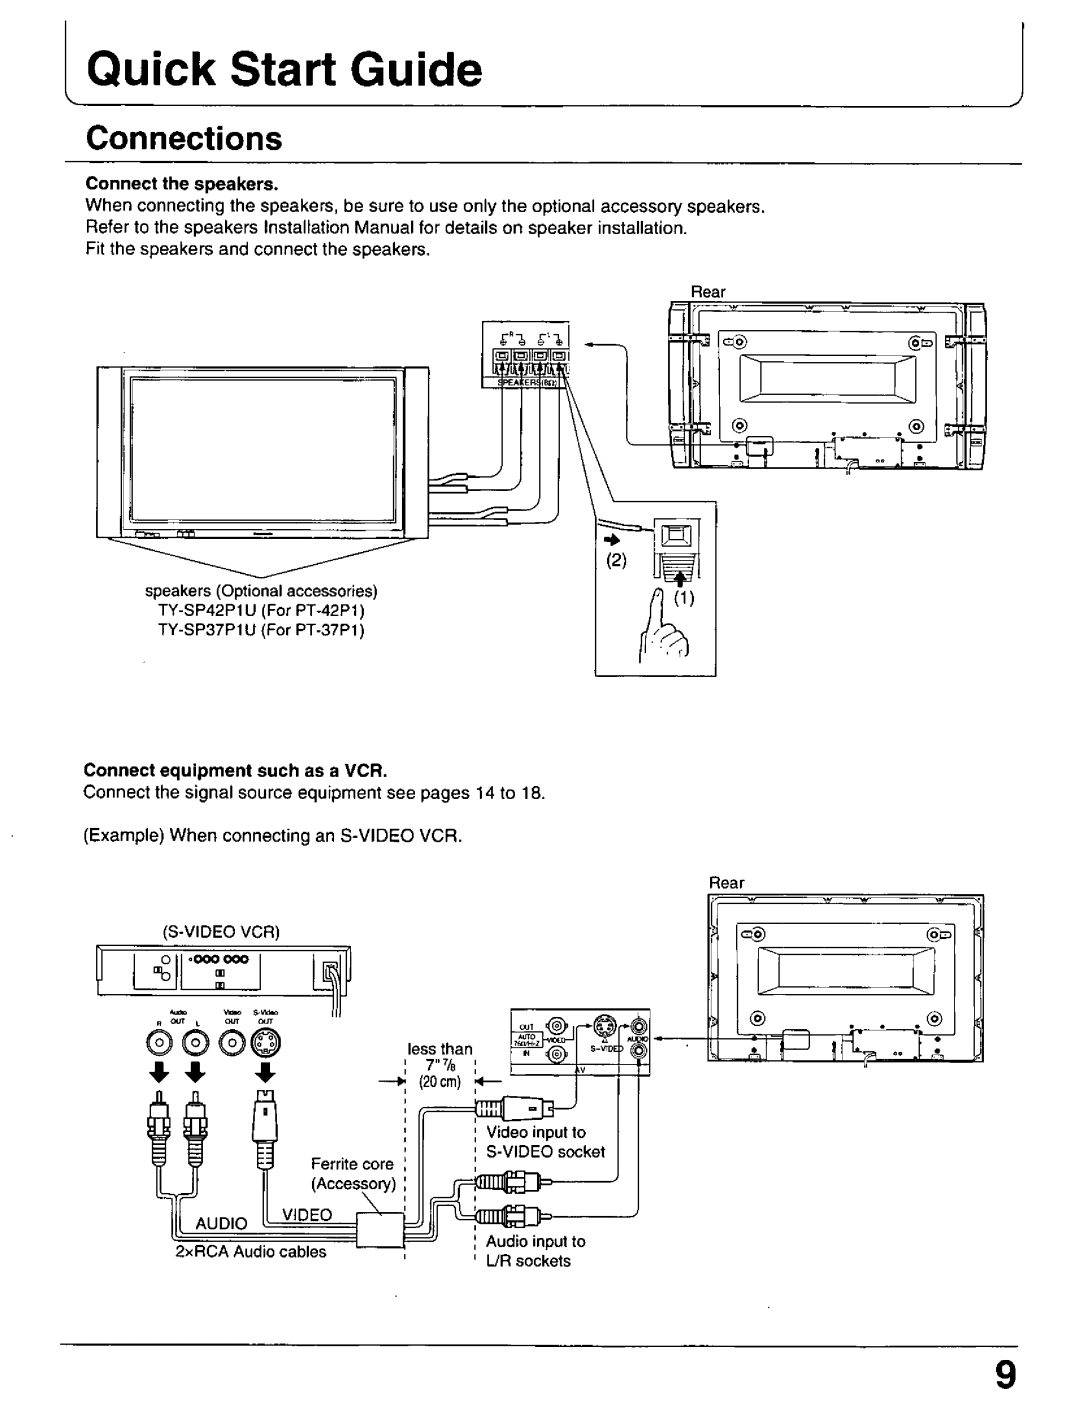 Panasonic PT 37P1, PT-42P1 manual 